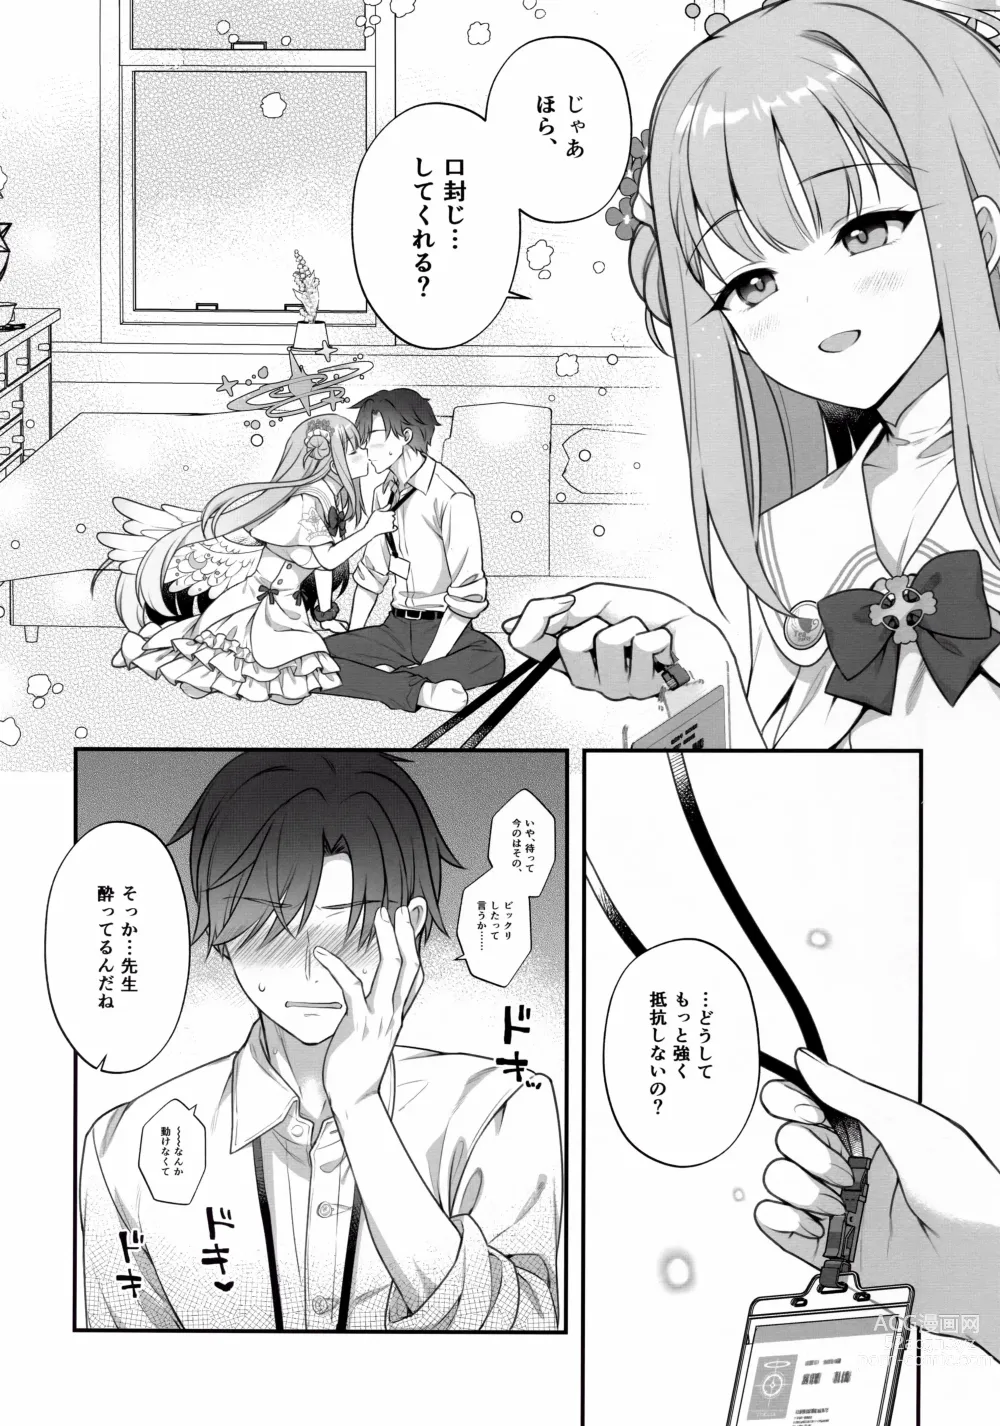 Page 5 of doujinshi Mika to Himitsu no Teatime